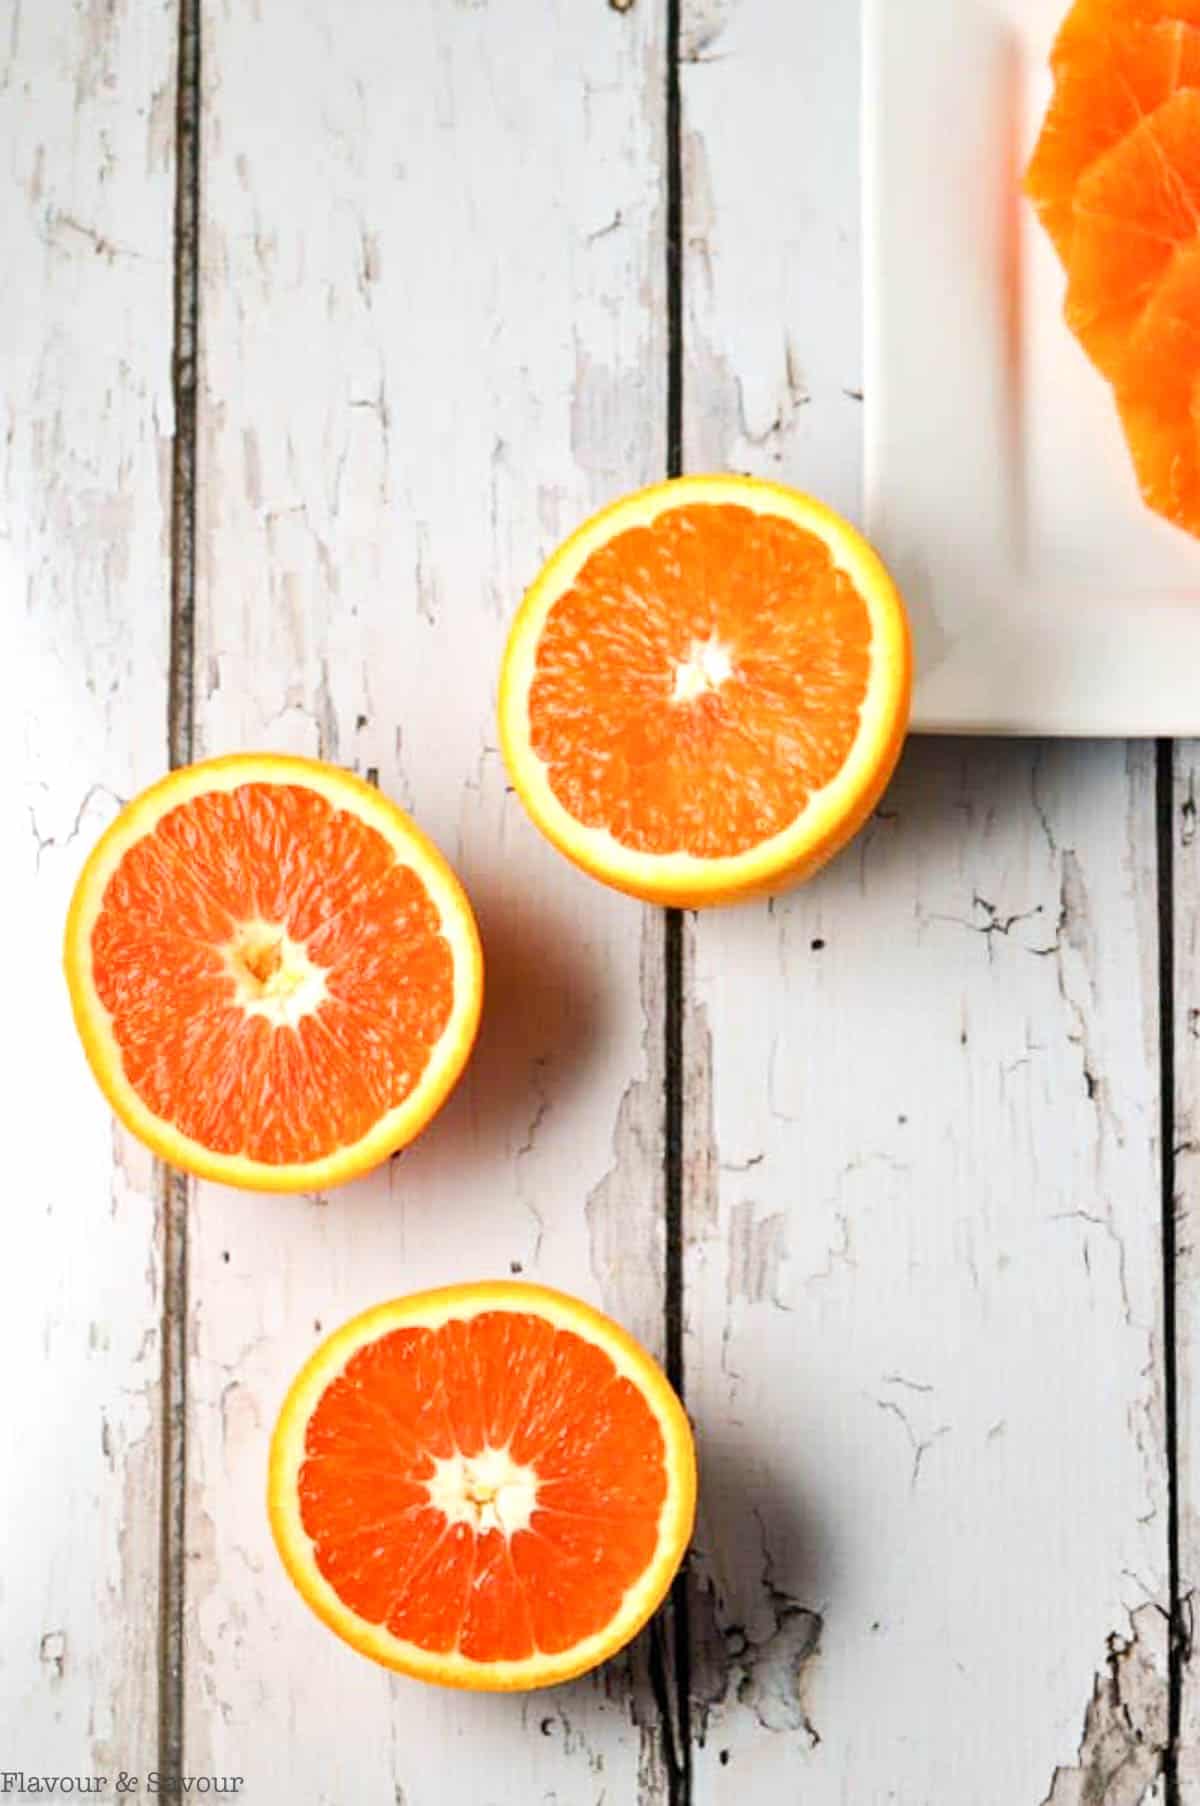 cara cara oranges cut in half